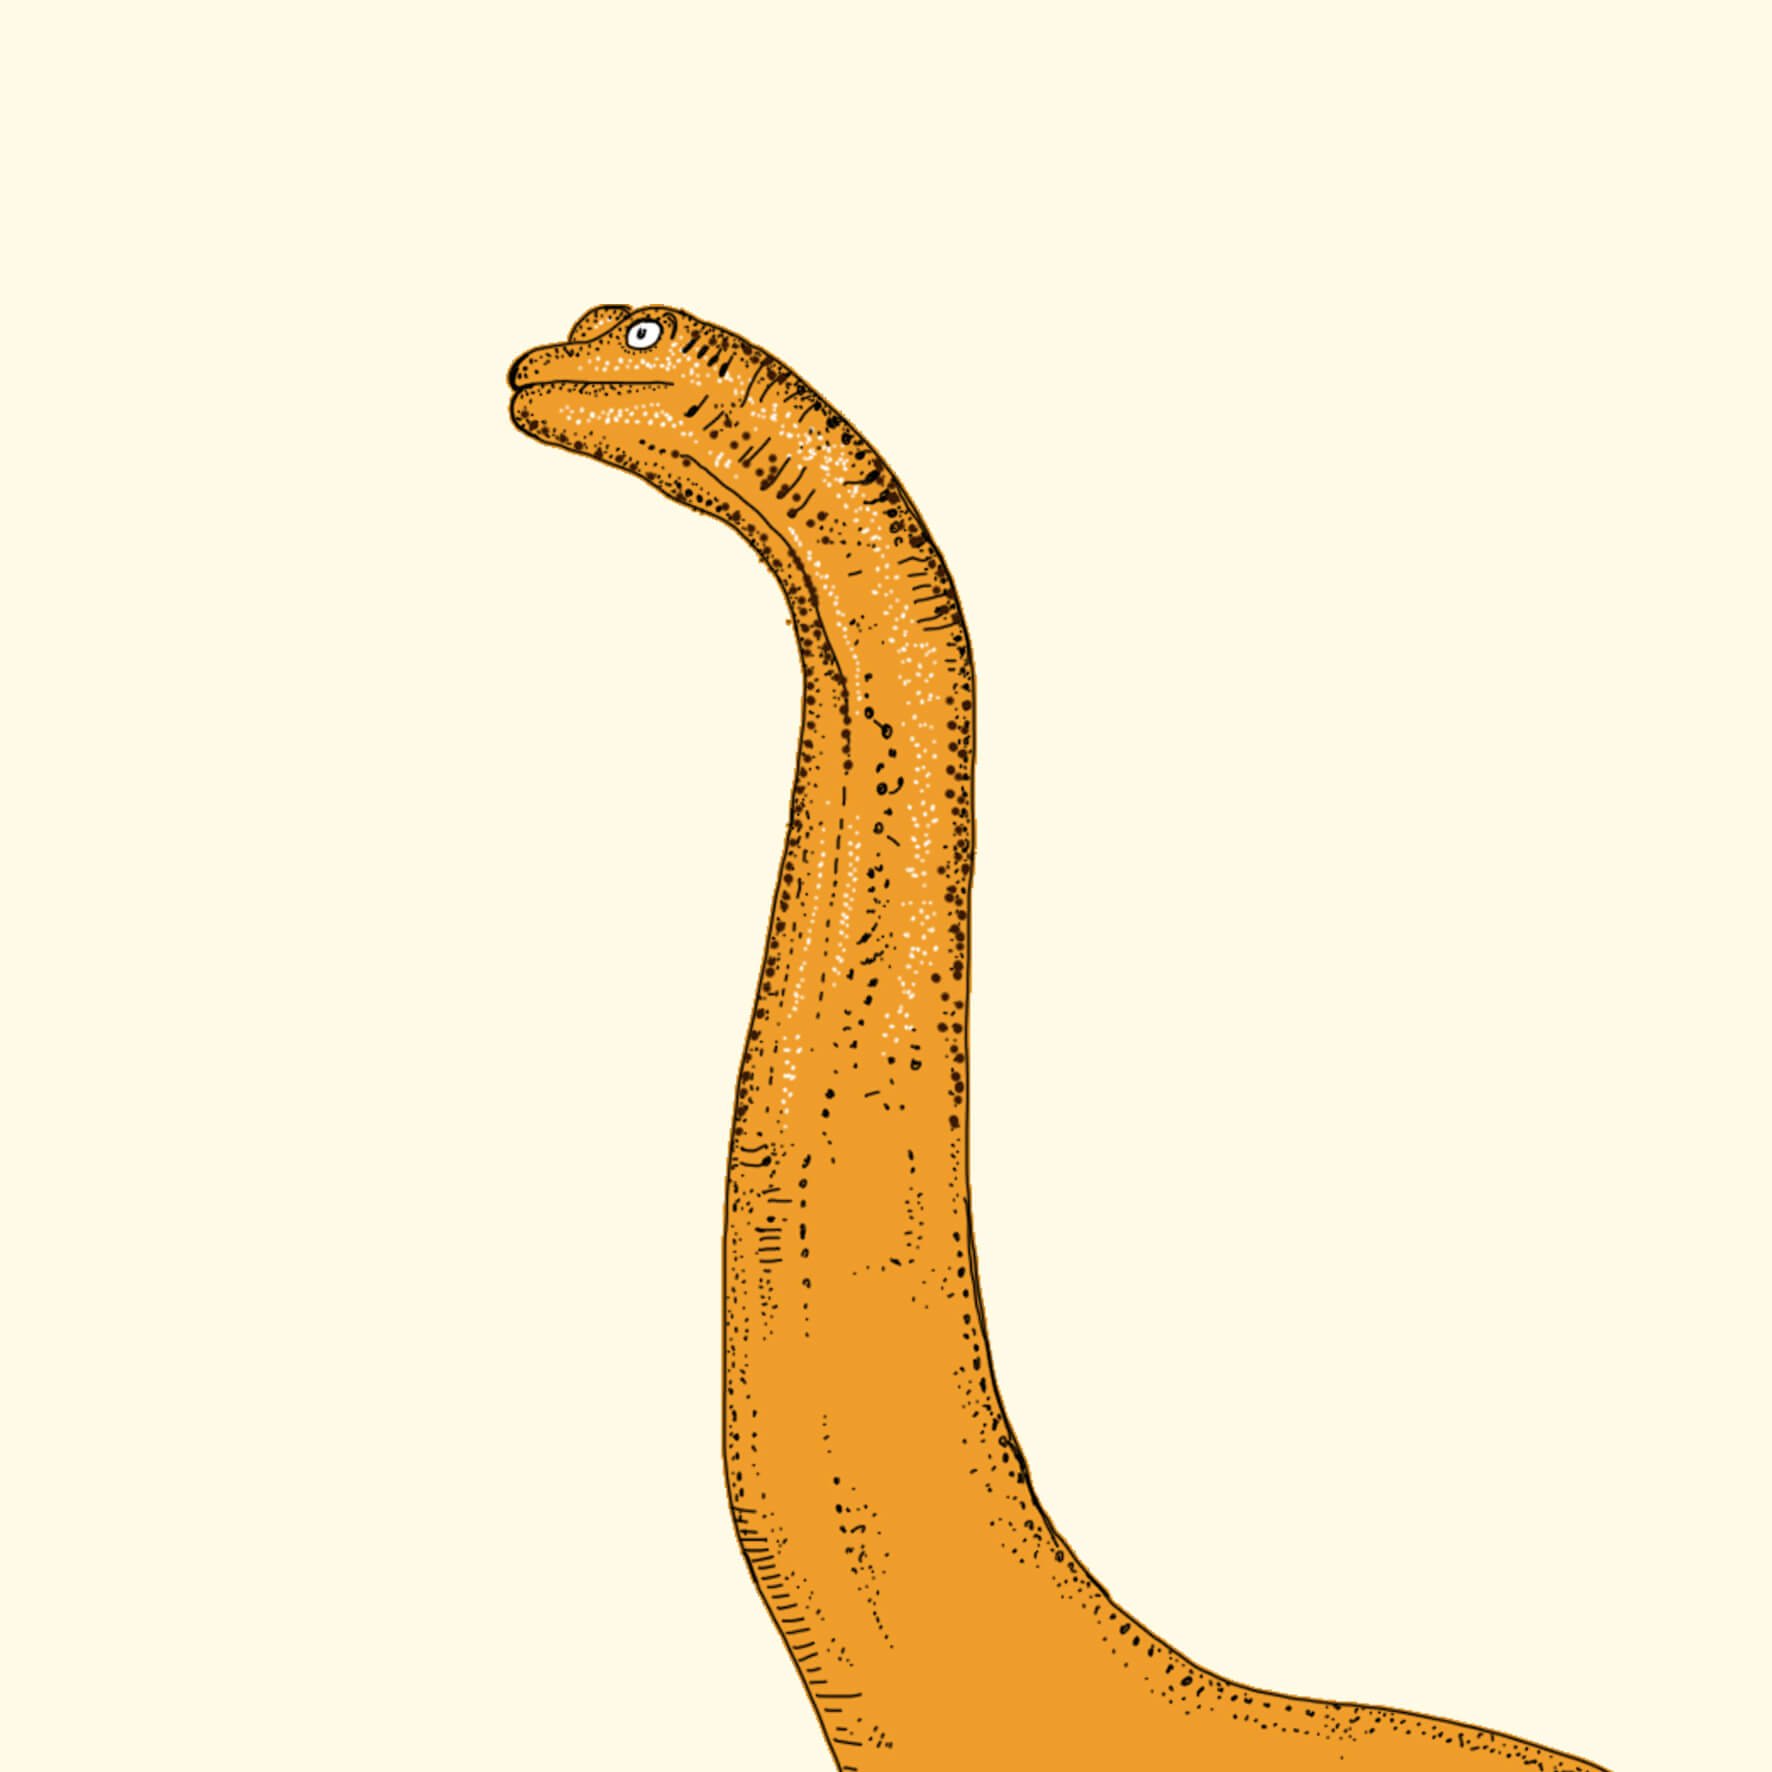 brachiasaurus dinosaur illustration.jpg